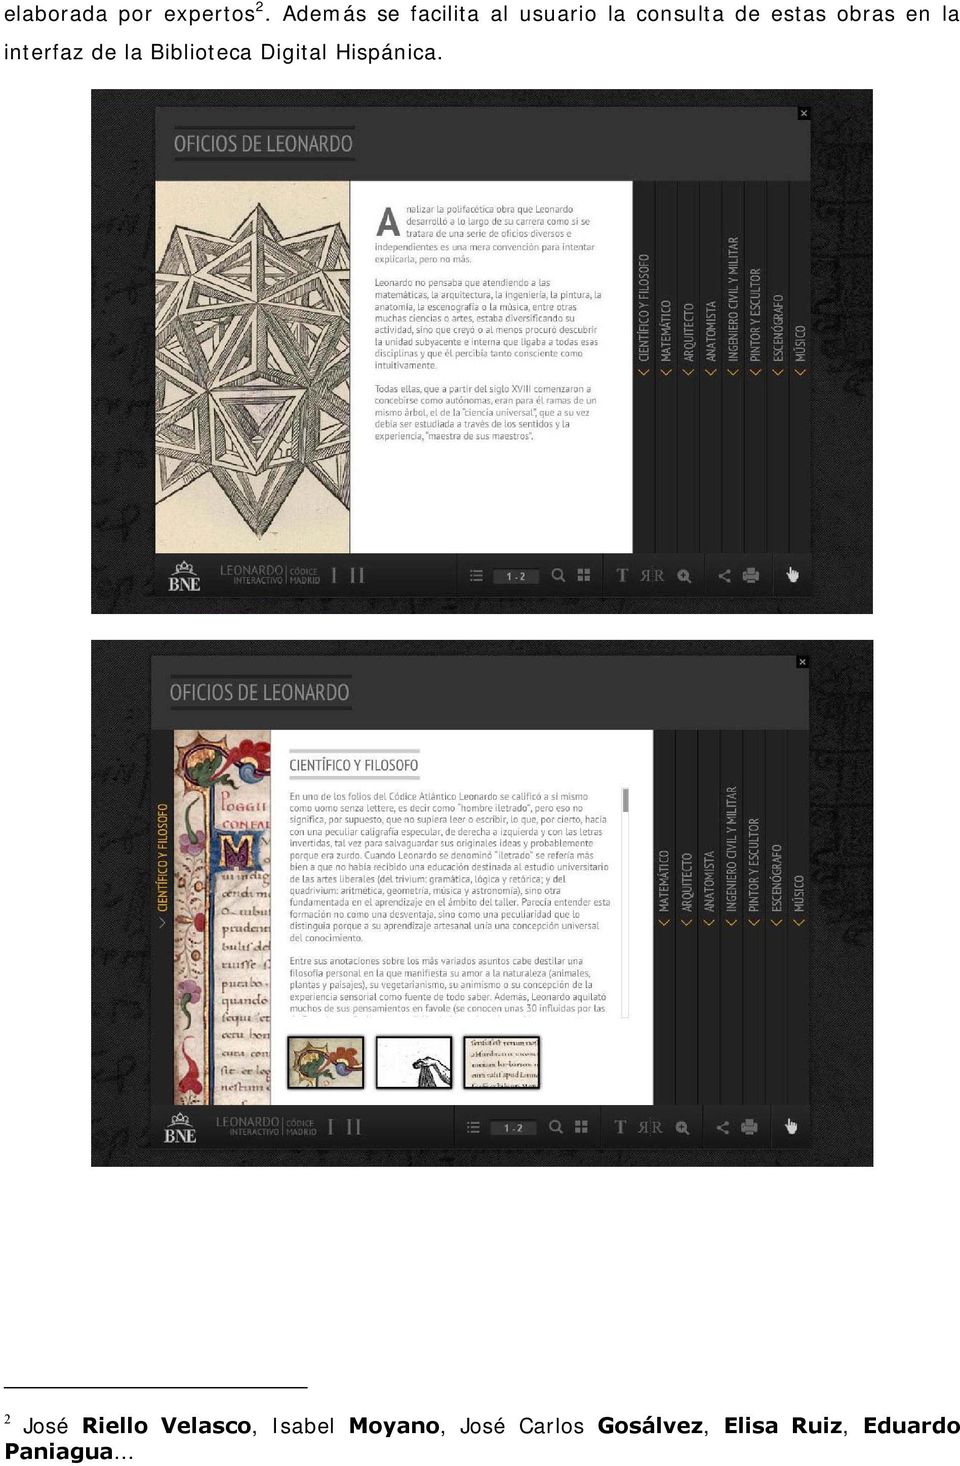 obras en la interfaz de la Biblioteca Digital Hispánica.